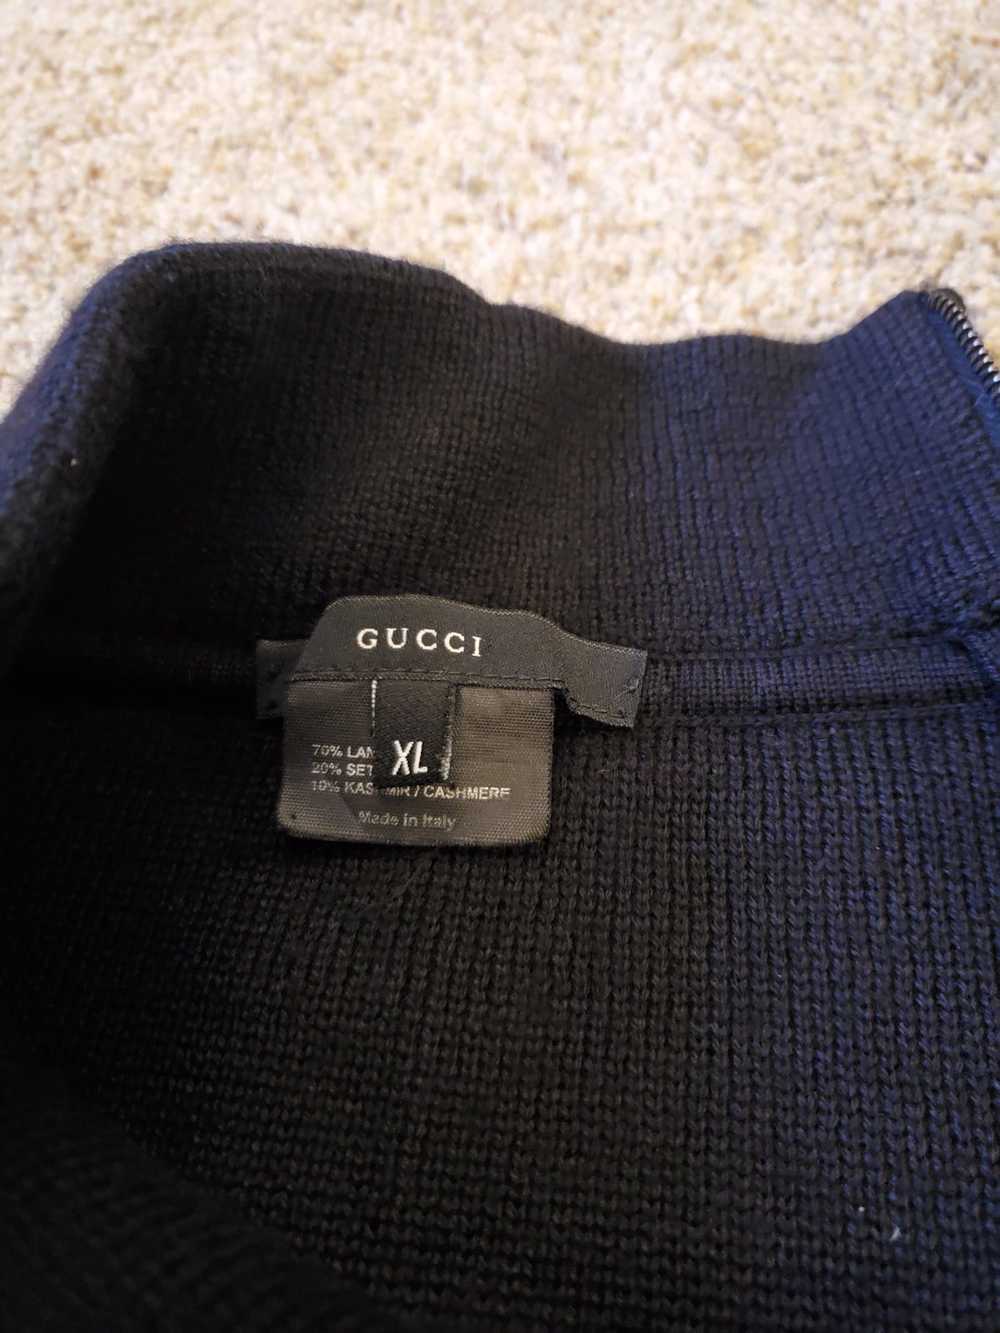 Gucci Gucci knit neck zip sweater - image 6